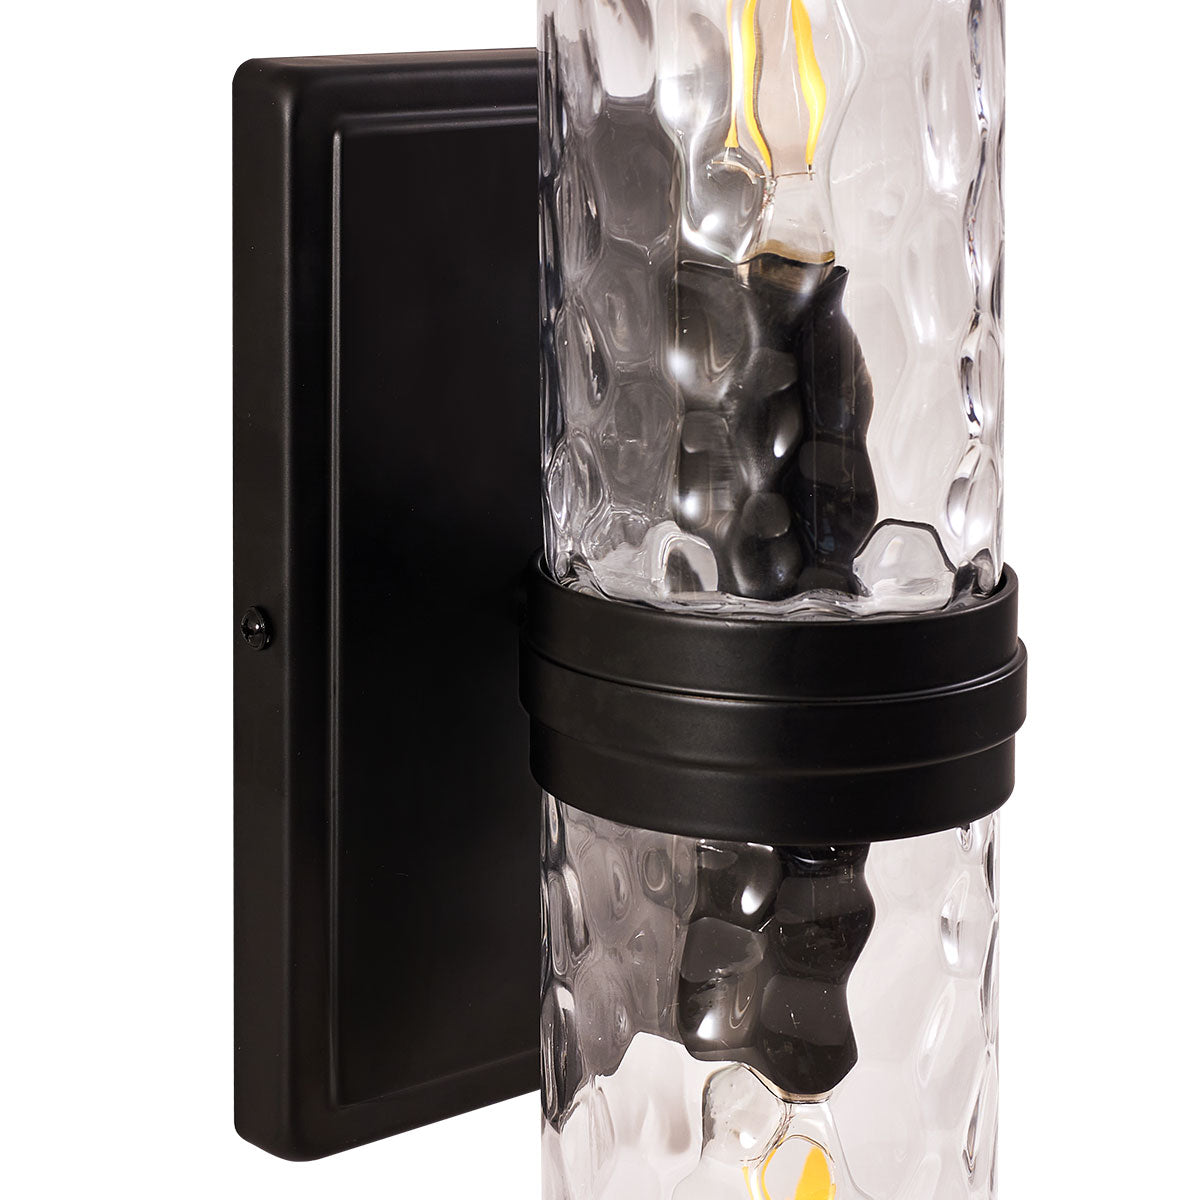 Modern Double-Cylinder Hammer Glass Shade Wall Bathroom Sconce Lights